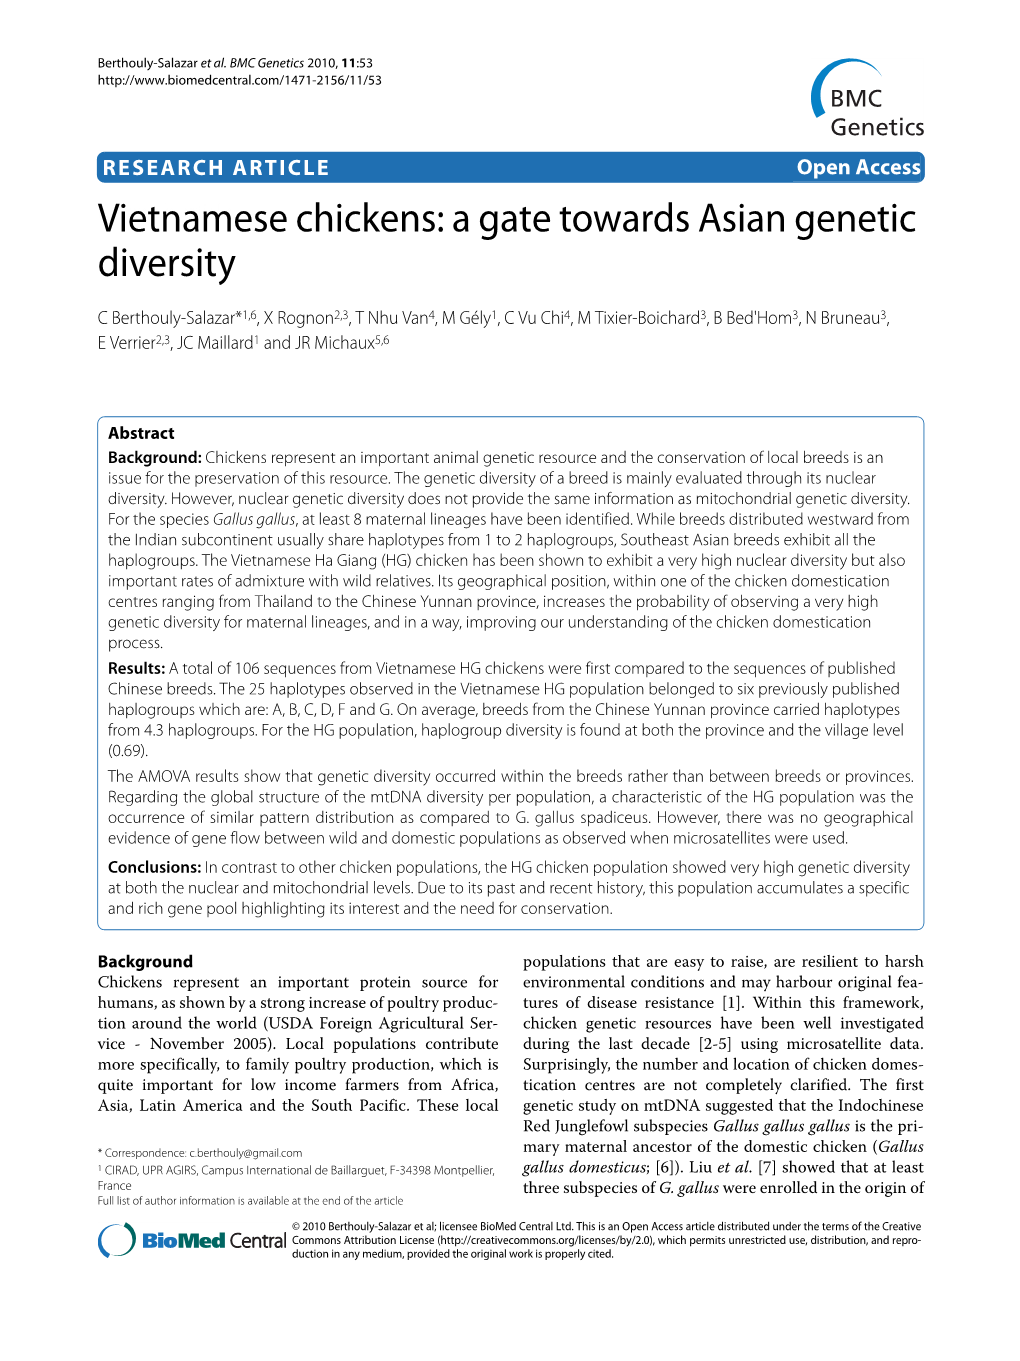 Vietnamese Chickens: a Gate Towards Asian Genetic Diversity